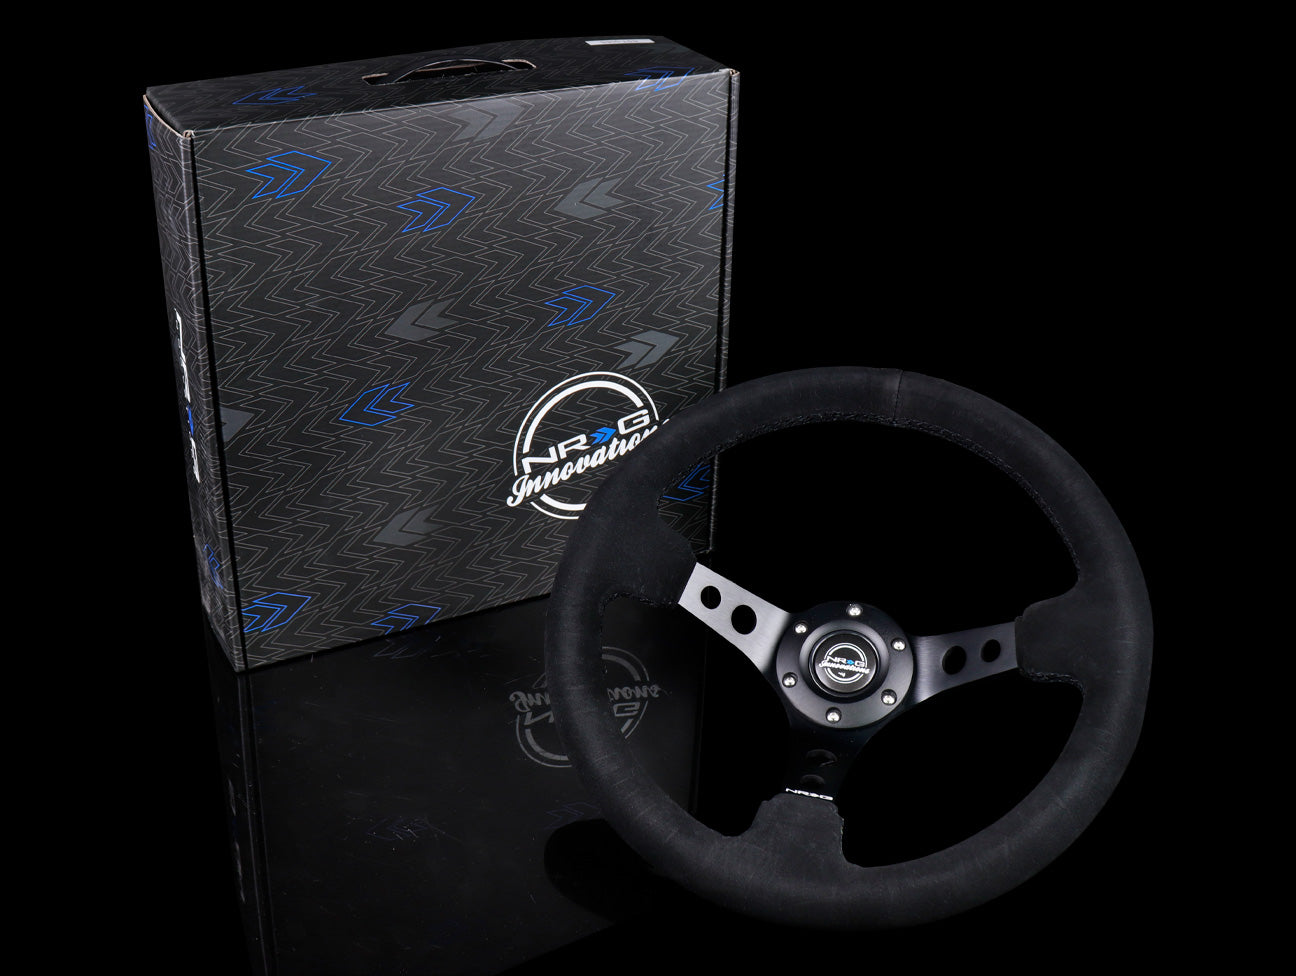 NRG Deep Dish Sport Steering Wheel - 350mm Black Suede / Black Stitch